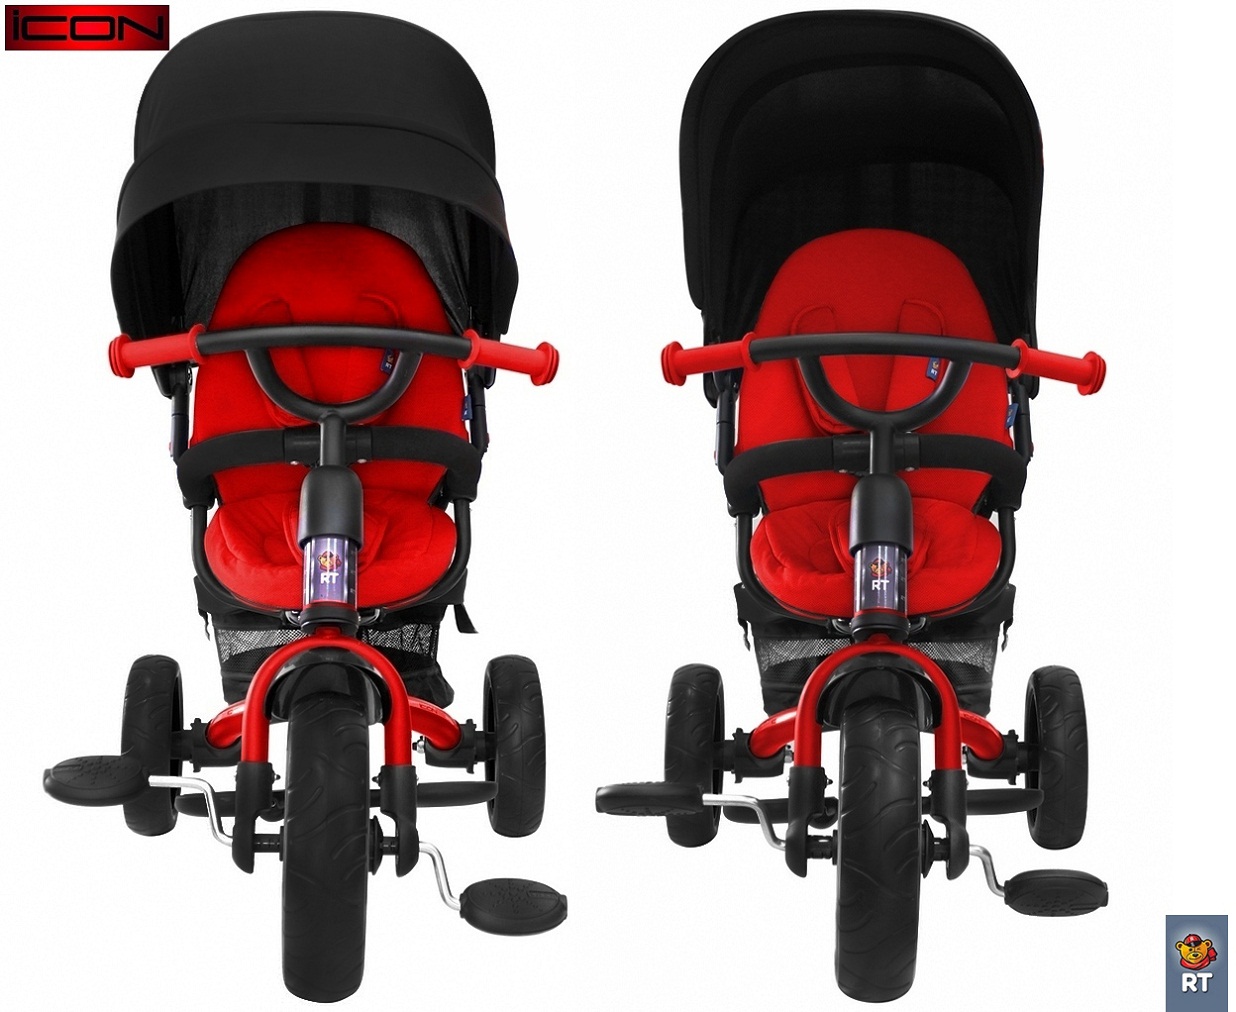 3-х колёсный велосипед RT Icon evoque New Stroller by Natali Prigaro EVA Black brilliant, красный  